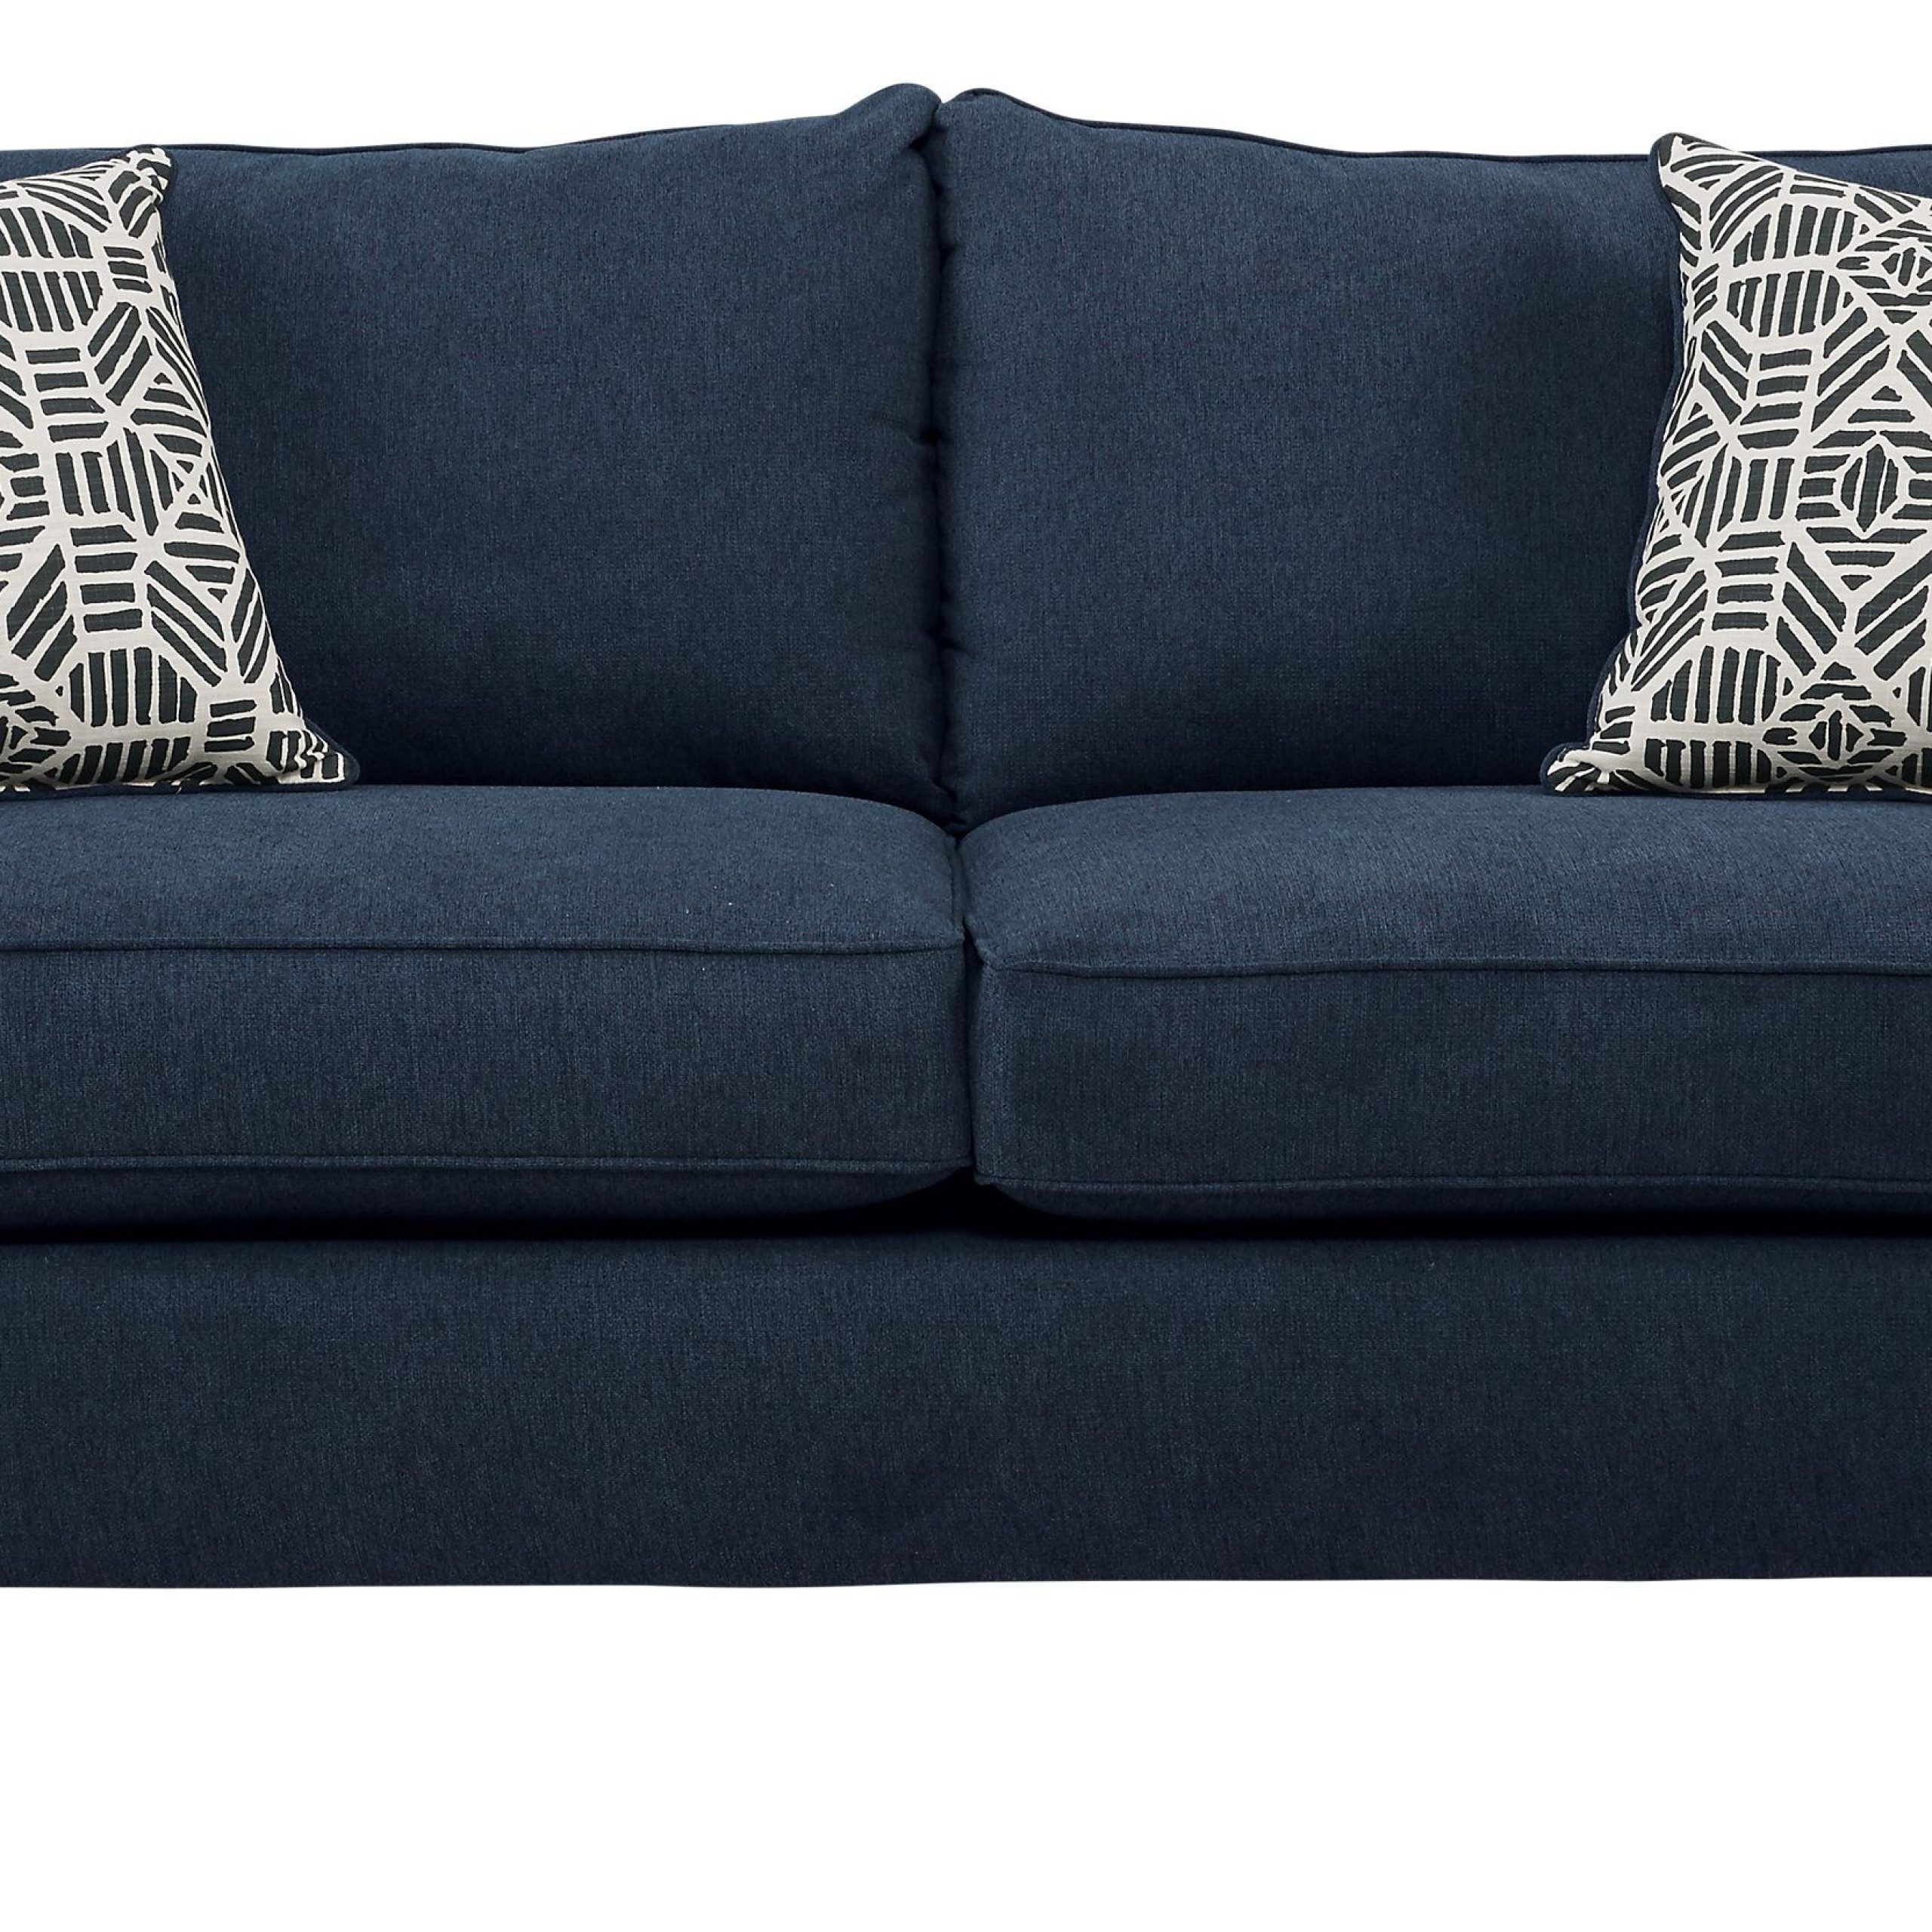 Navy Sleeper Sofa Couches Regarding 2018 Emsworth Navy Sleeper Sofa – Casual, Textured Sofa Bar, Sofa Couch (View 2 of 15)